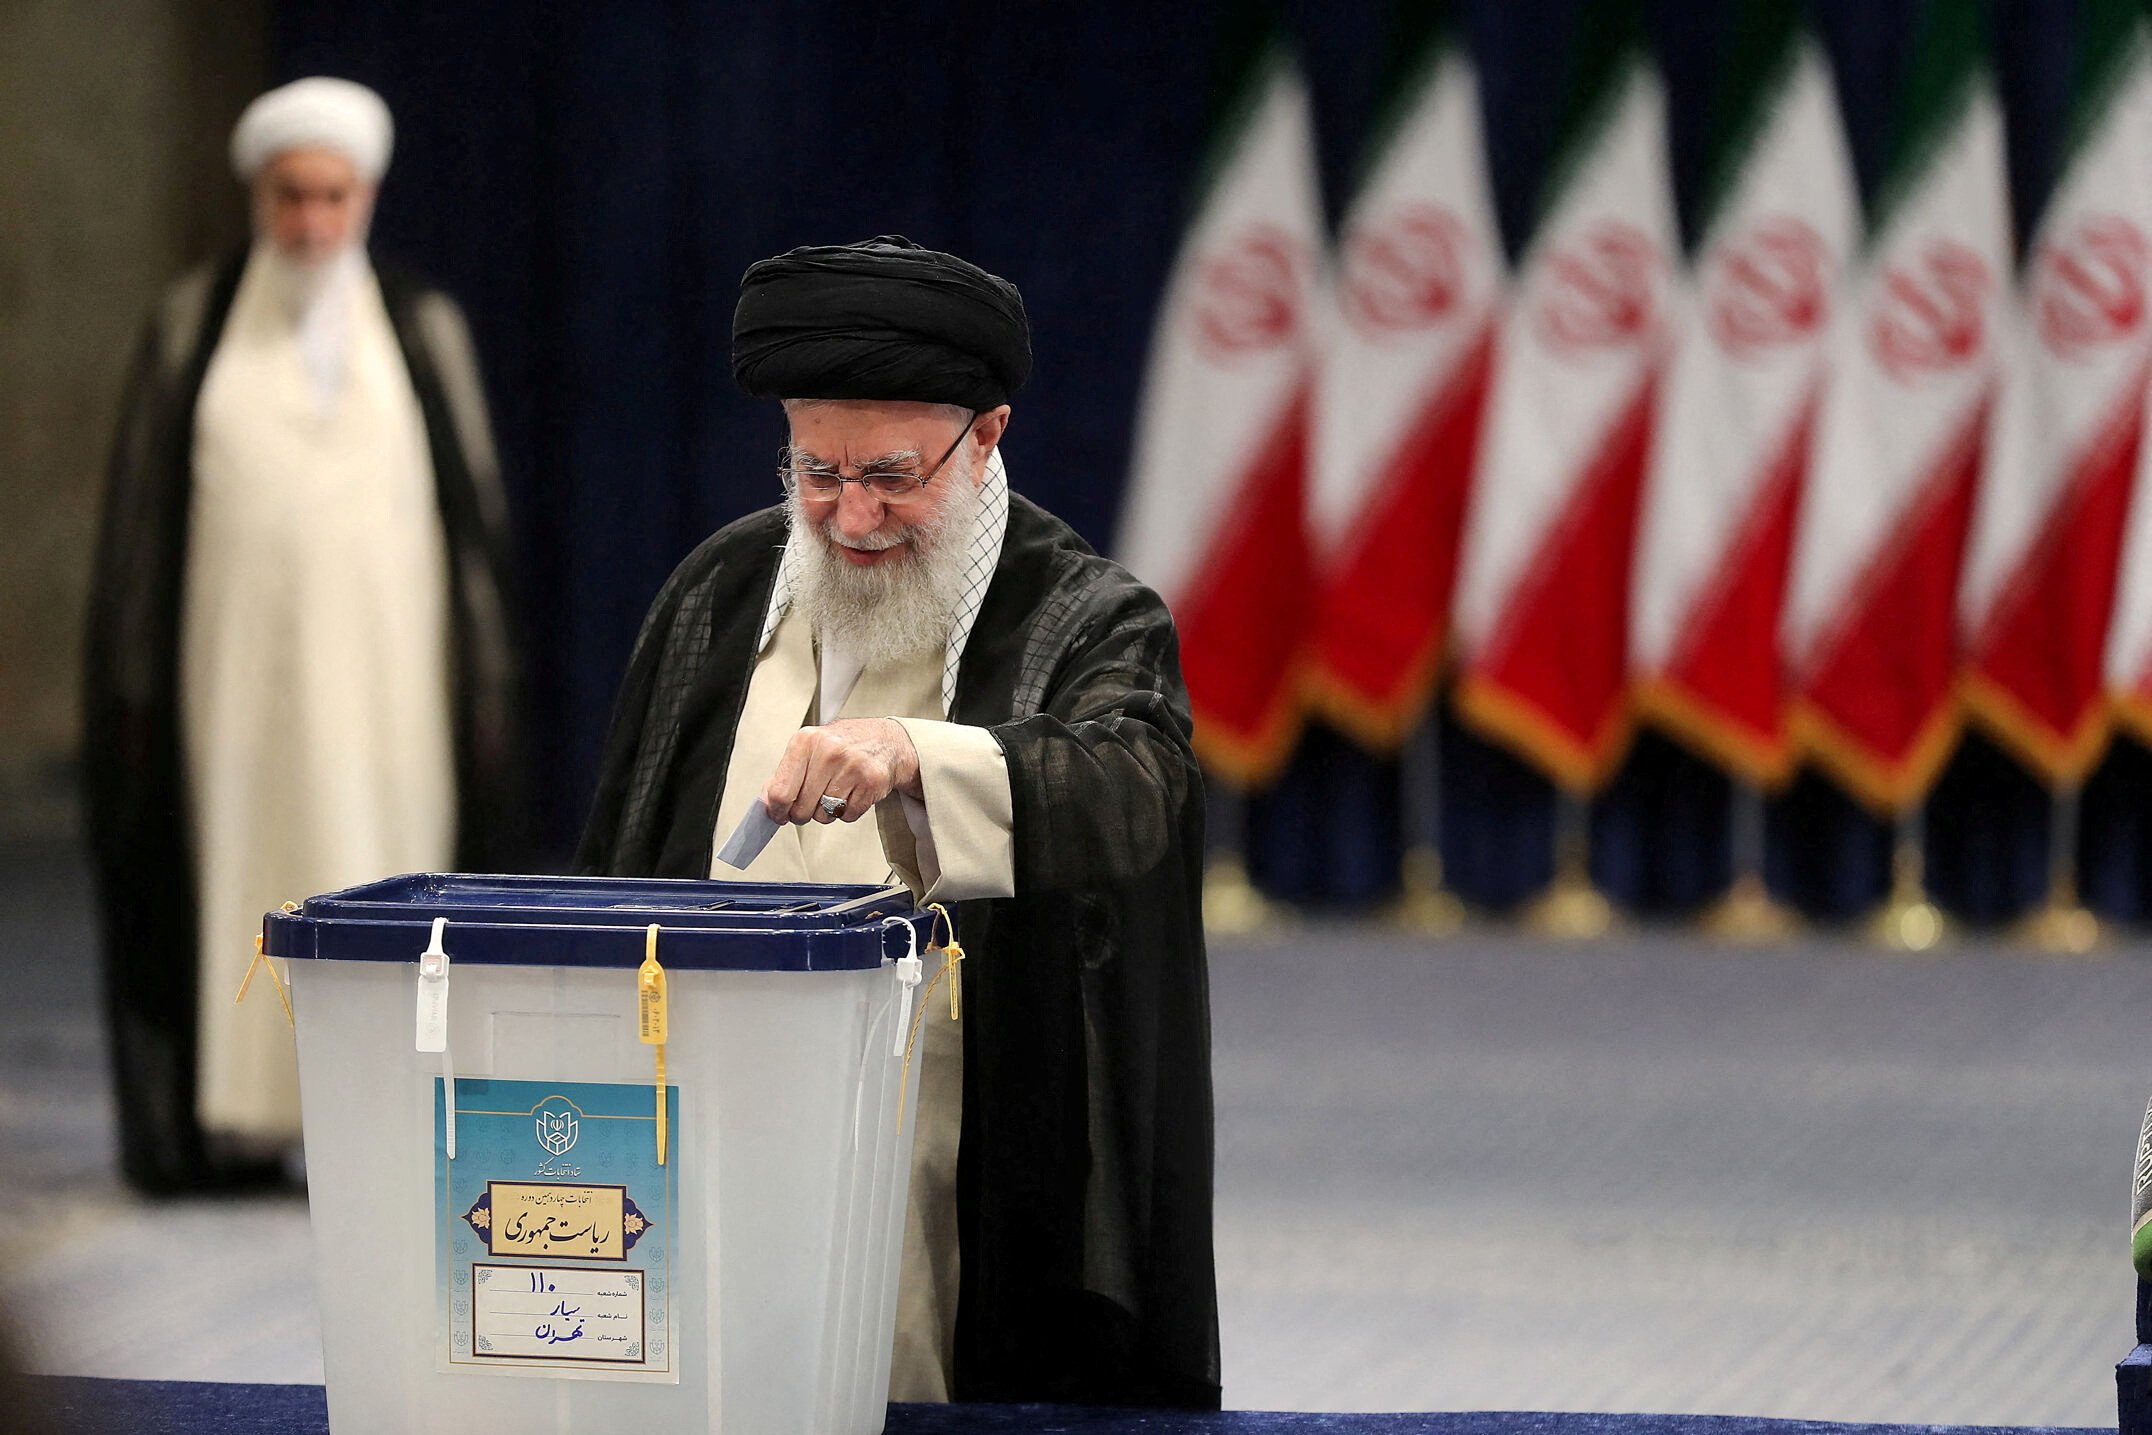 Iran’s Supreme Leader Ayatollah Ali Khamenei casting his vote. Photo: West Asia News Agency via Reuters